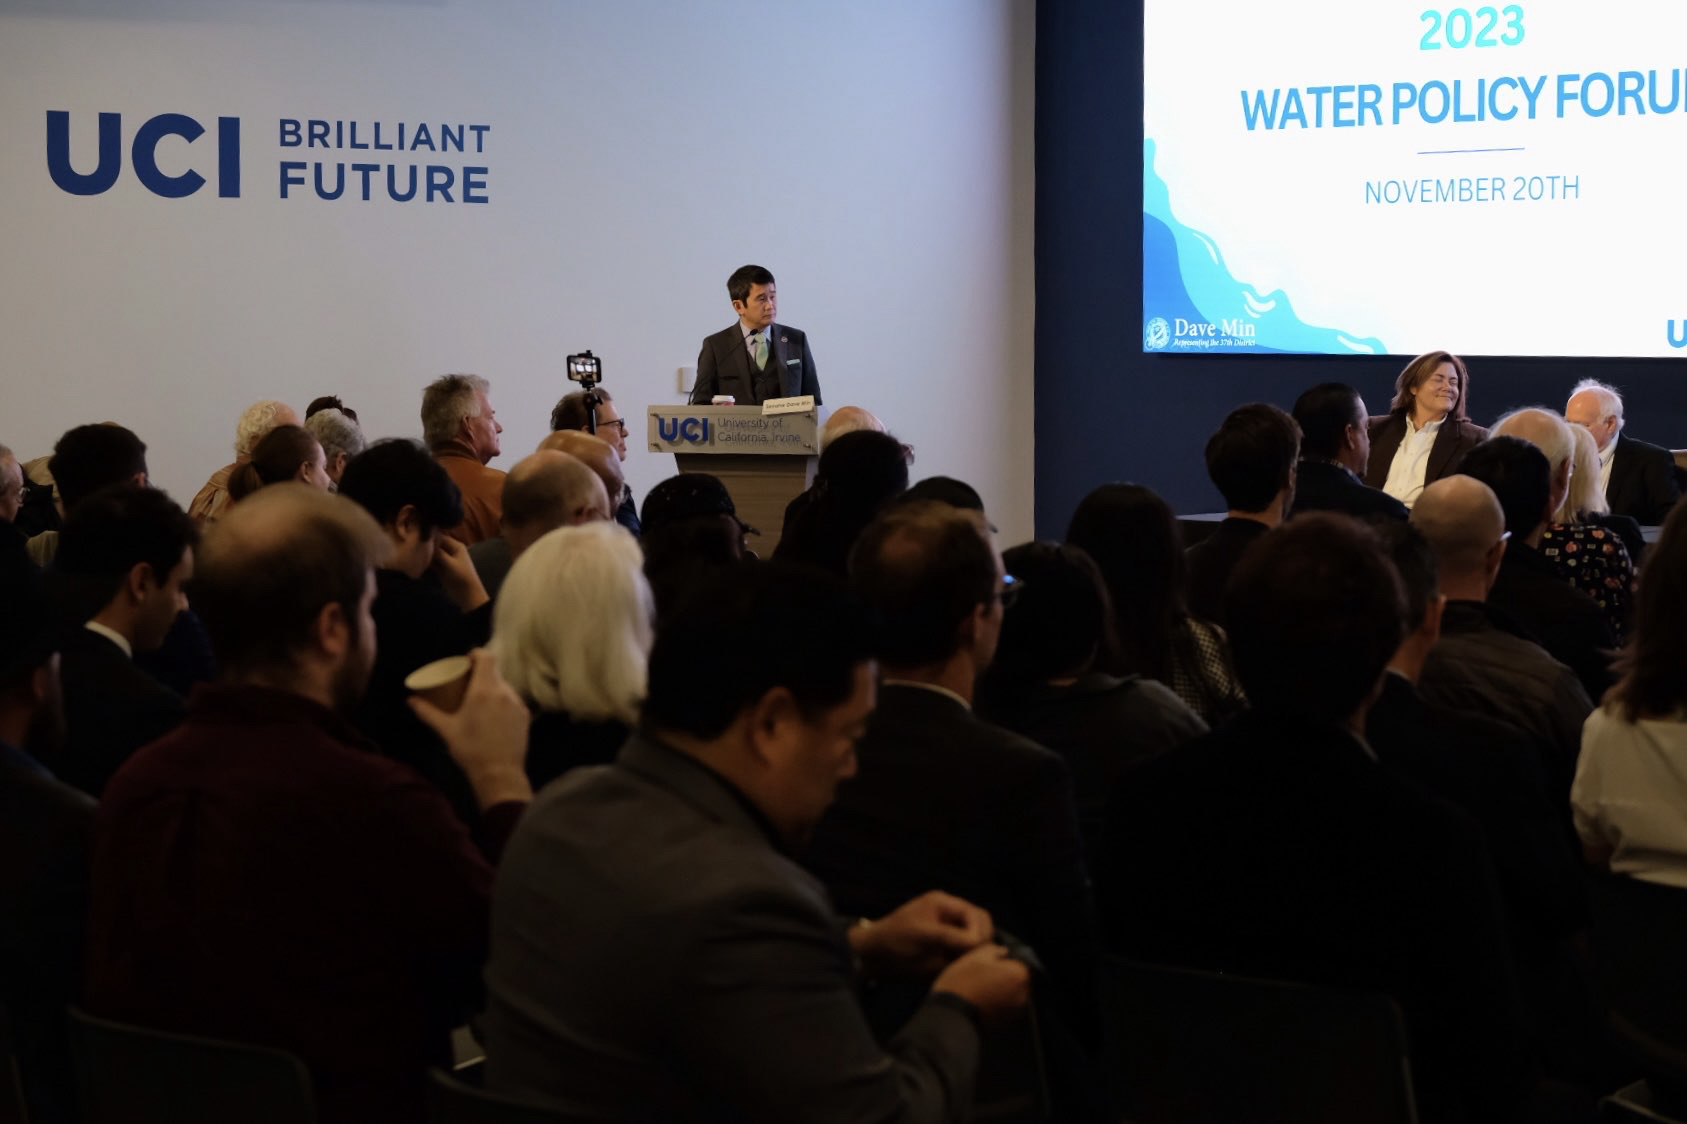 Senator Min hosts 2023 Water Policy Forum at UC Irvine.